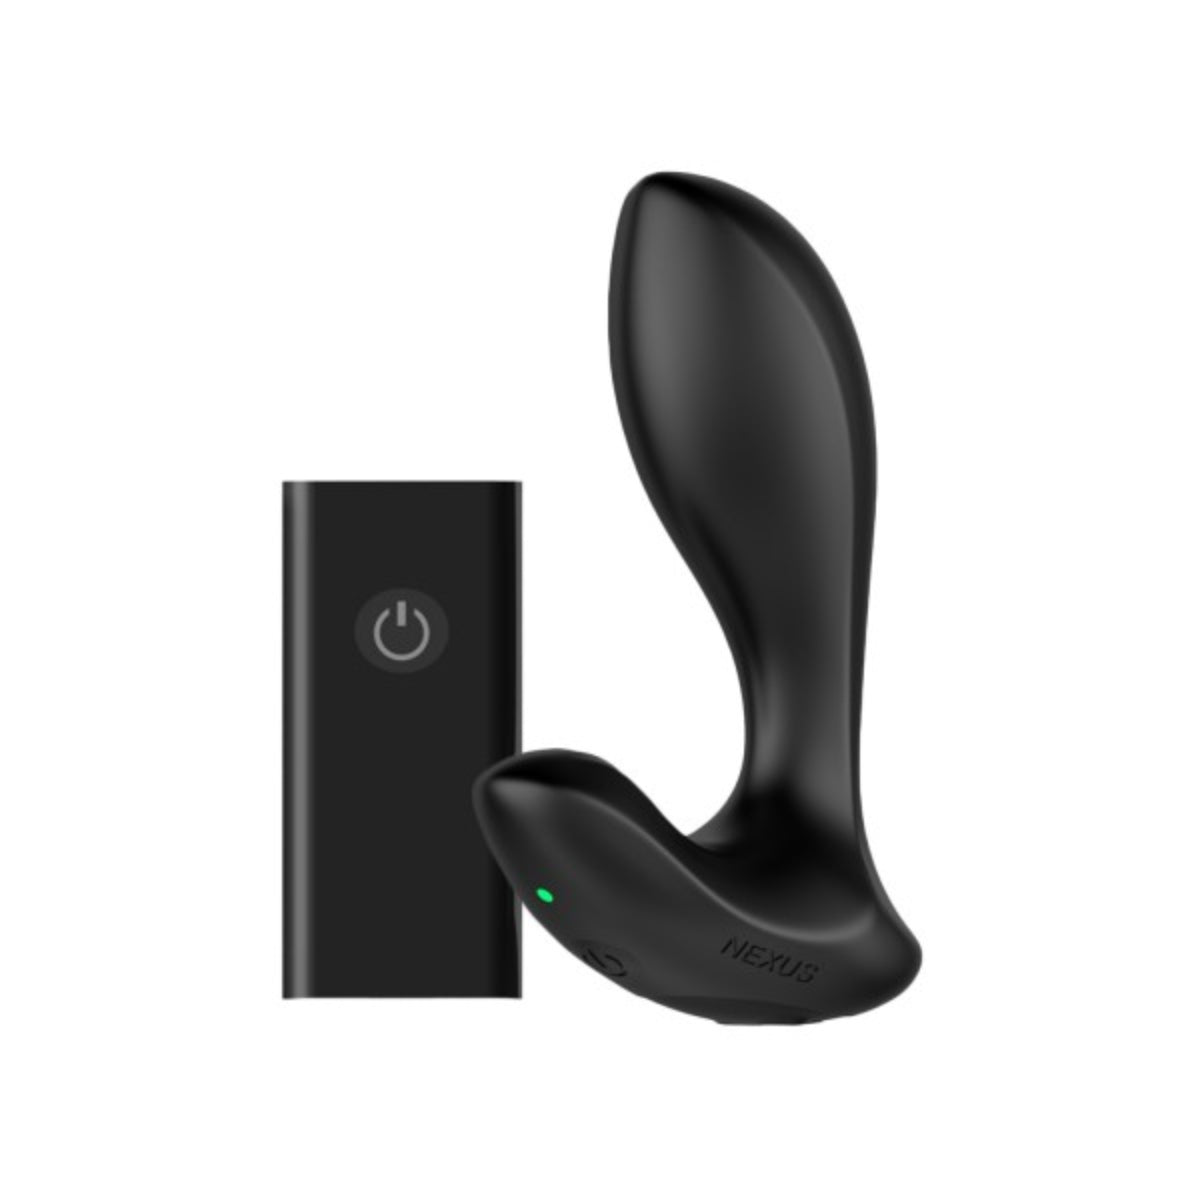 Vibrating Butt Plugs Nexus Duo Remote Control Beginner Butt Plug Black Small   